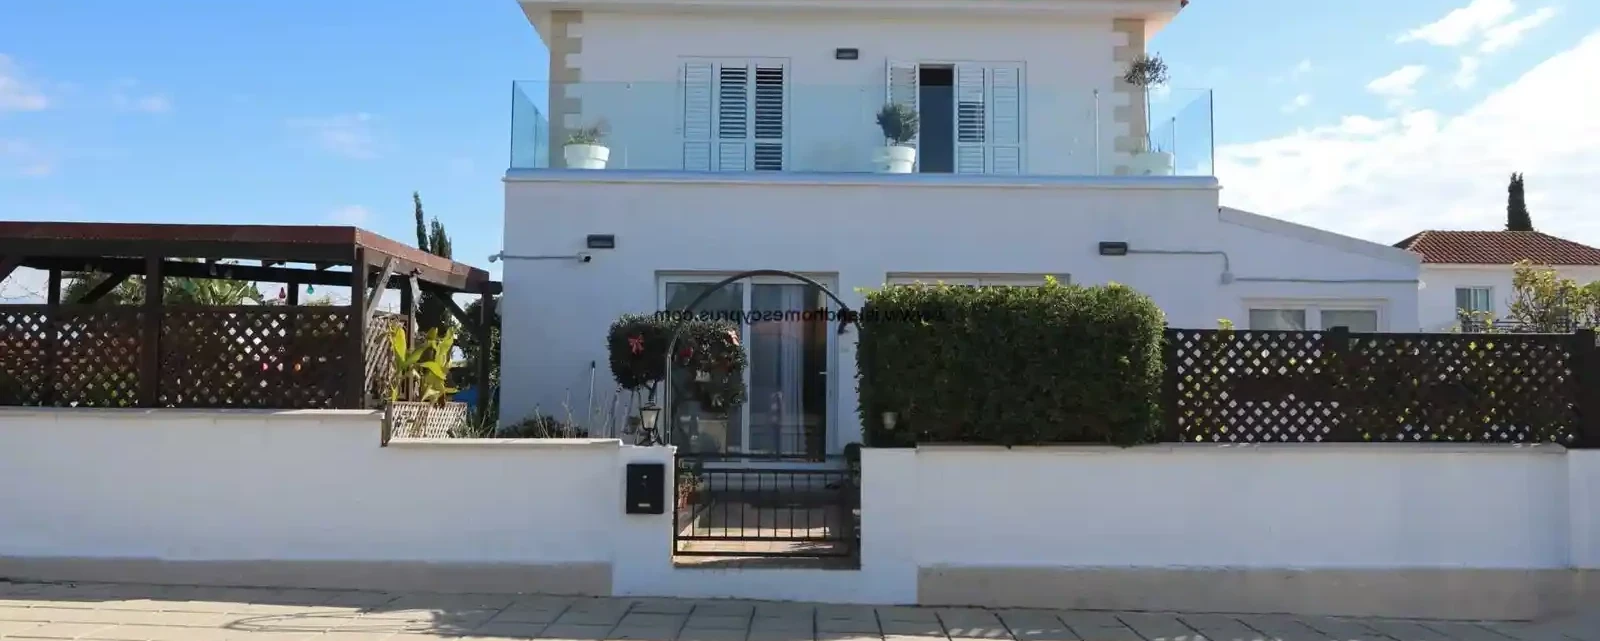 3-bedroom villa fоr sаle €333.000, image 1